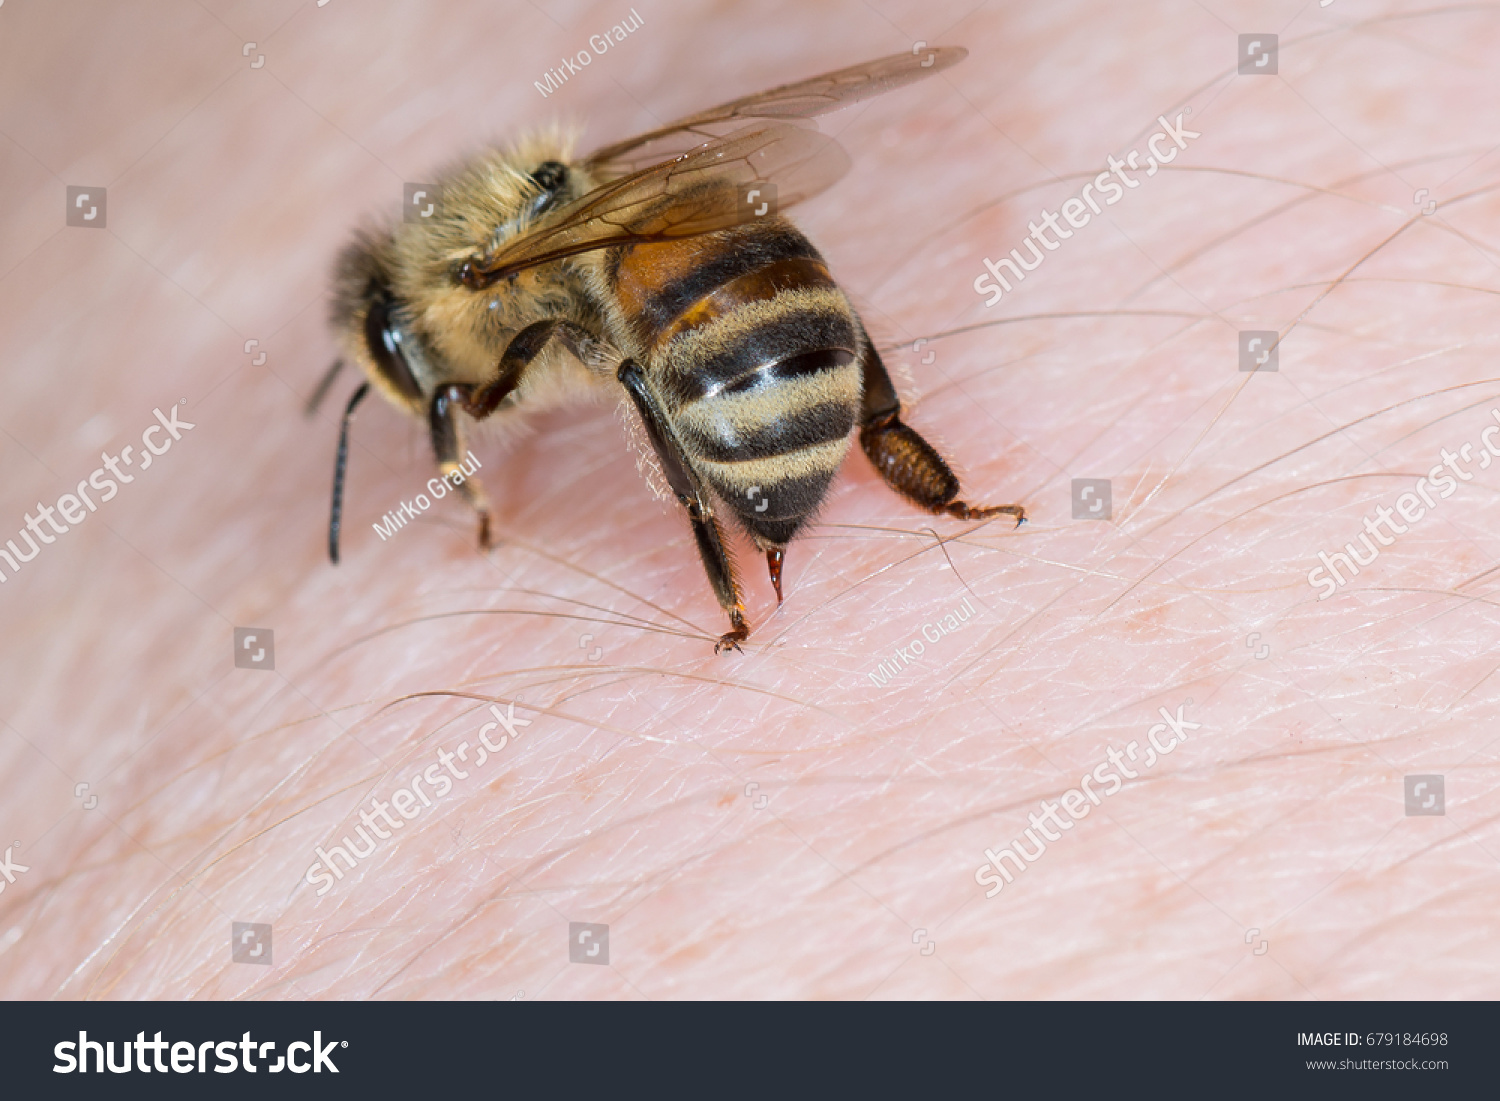 67,521 Bee sting Images, Stock Photos & Vectors | Shutterstock